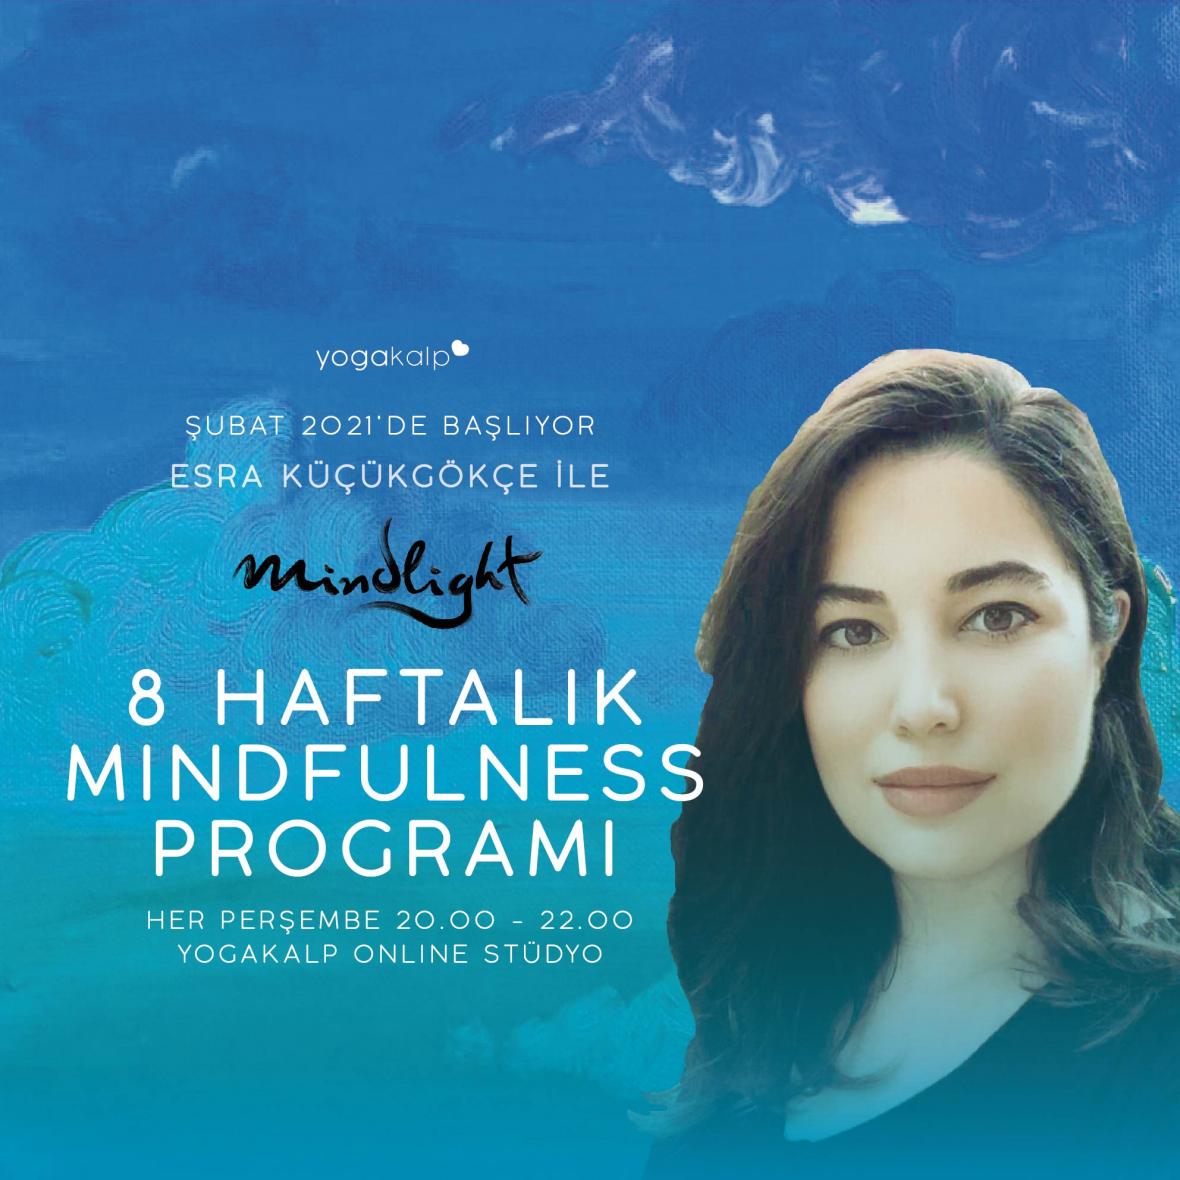 Esra Küçükgökçe ile Mindlight 8 Haftalık Mindfulness Programı